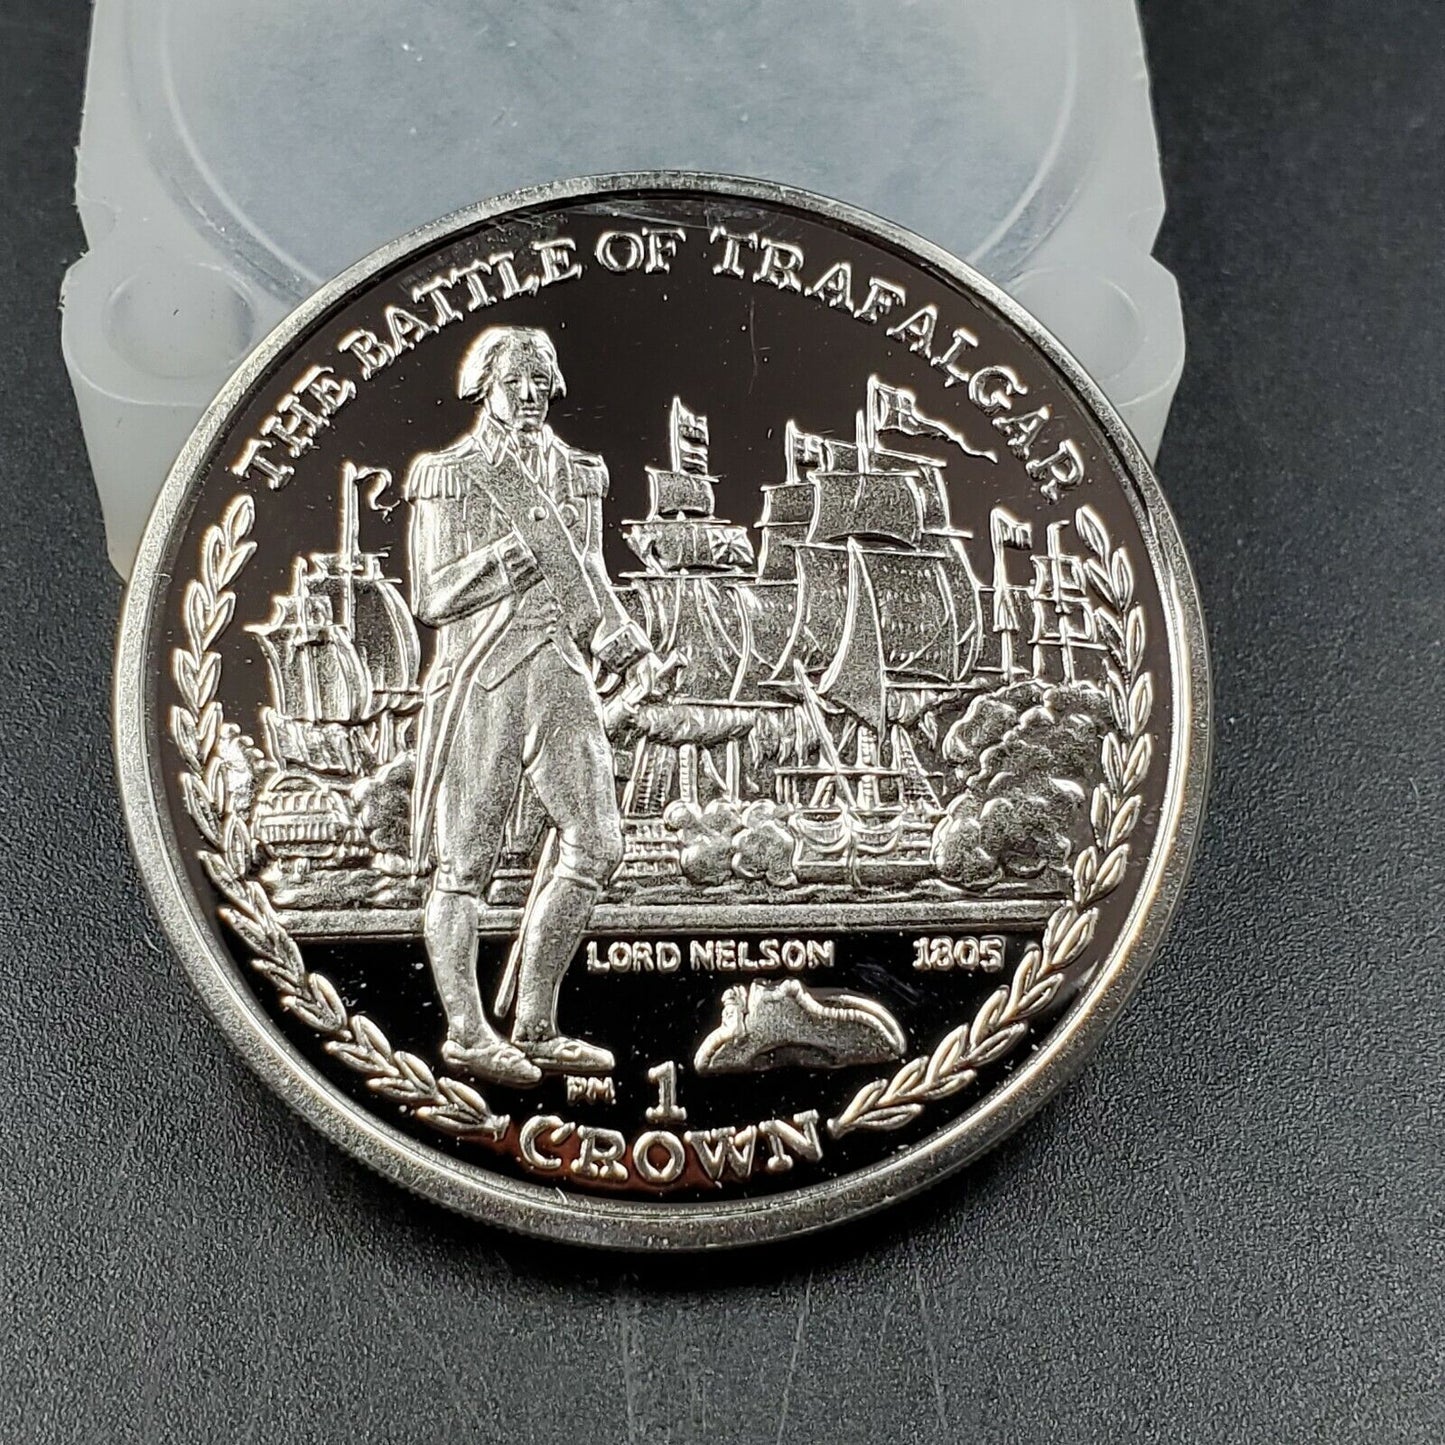 2006 Pobjoy Mint Isle of Man Battle of Trafalgar Gem Proof Silver Coin Napoleon